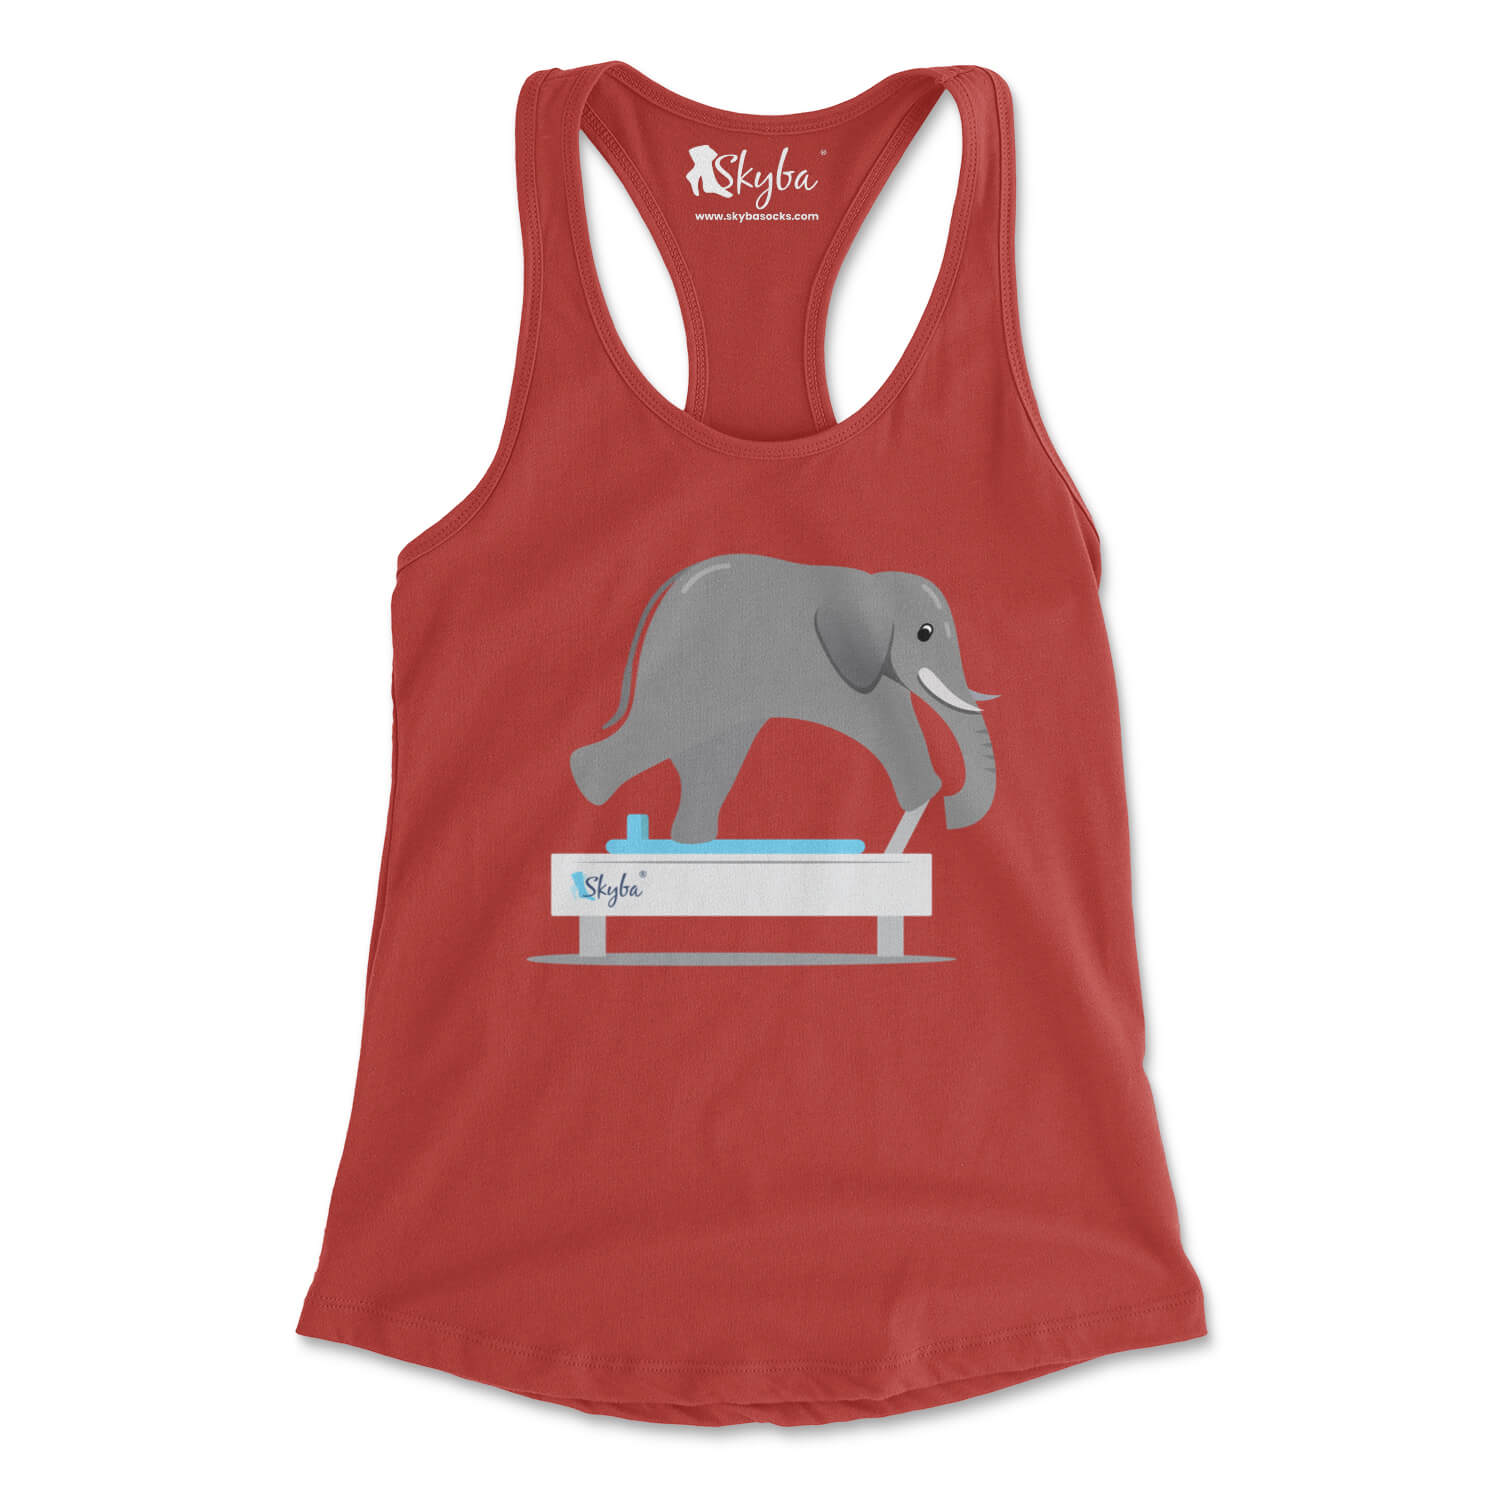 Elephant on Reformer - Women's Slim Fit Tank Skyba Tank Top